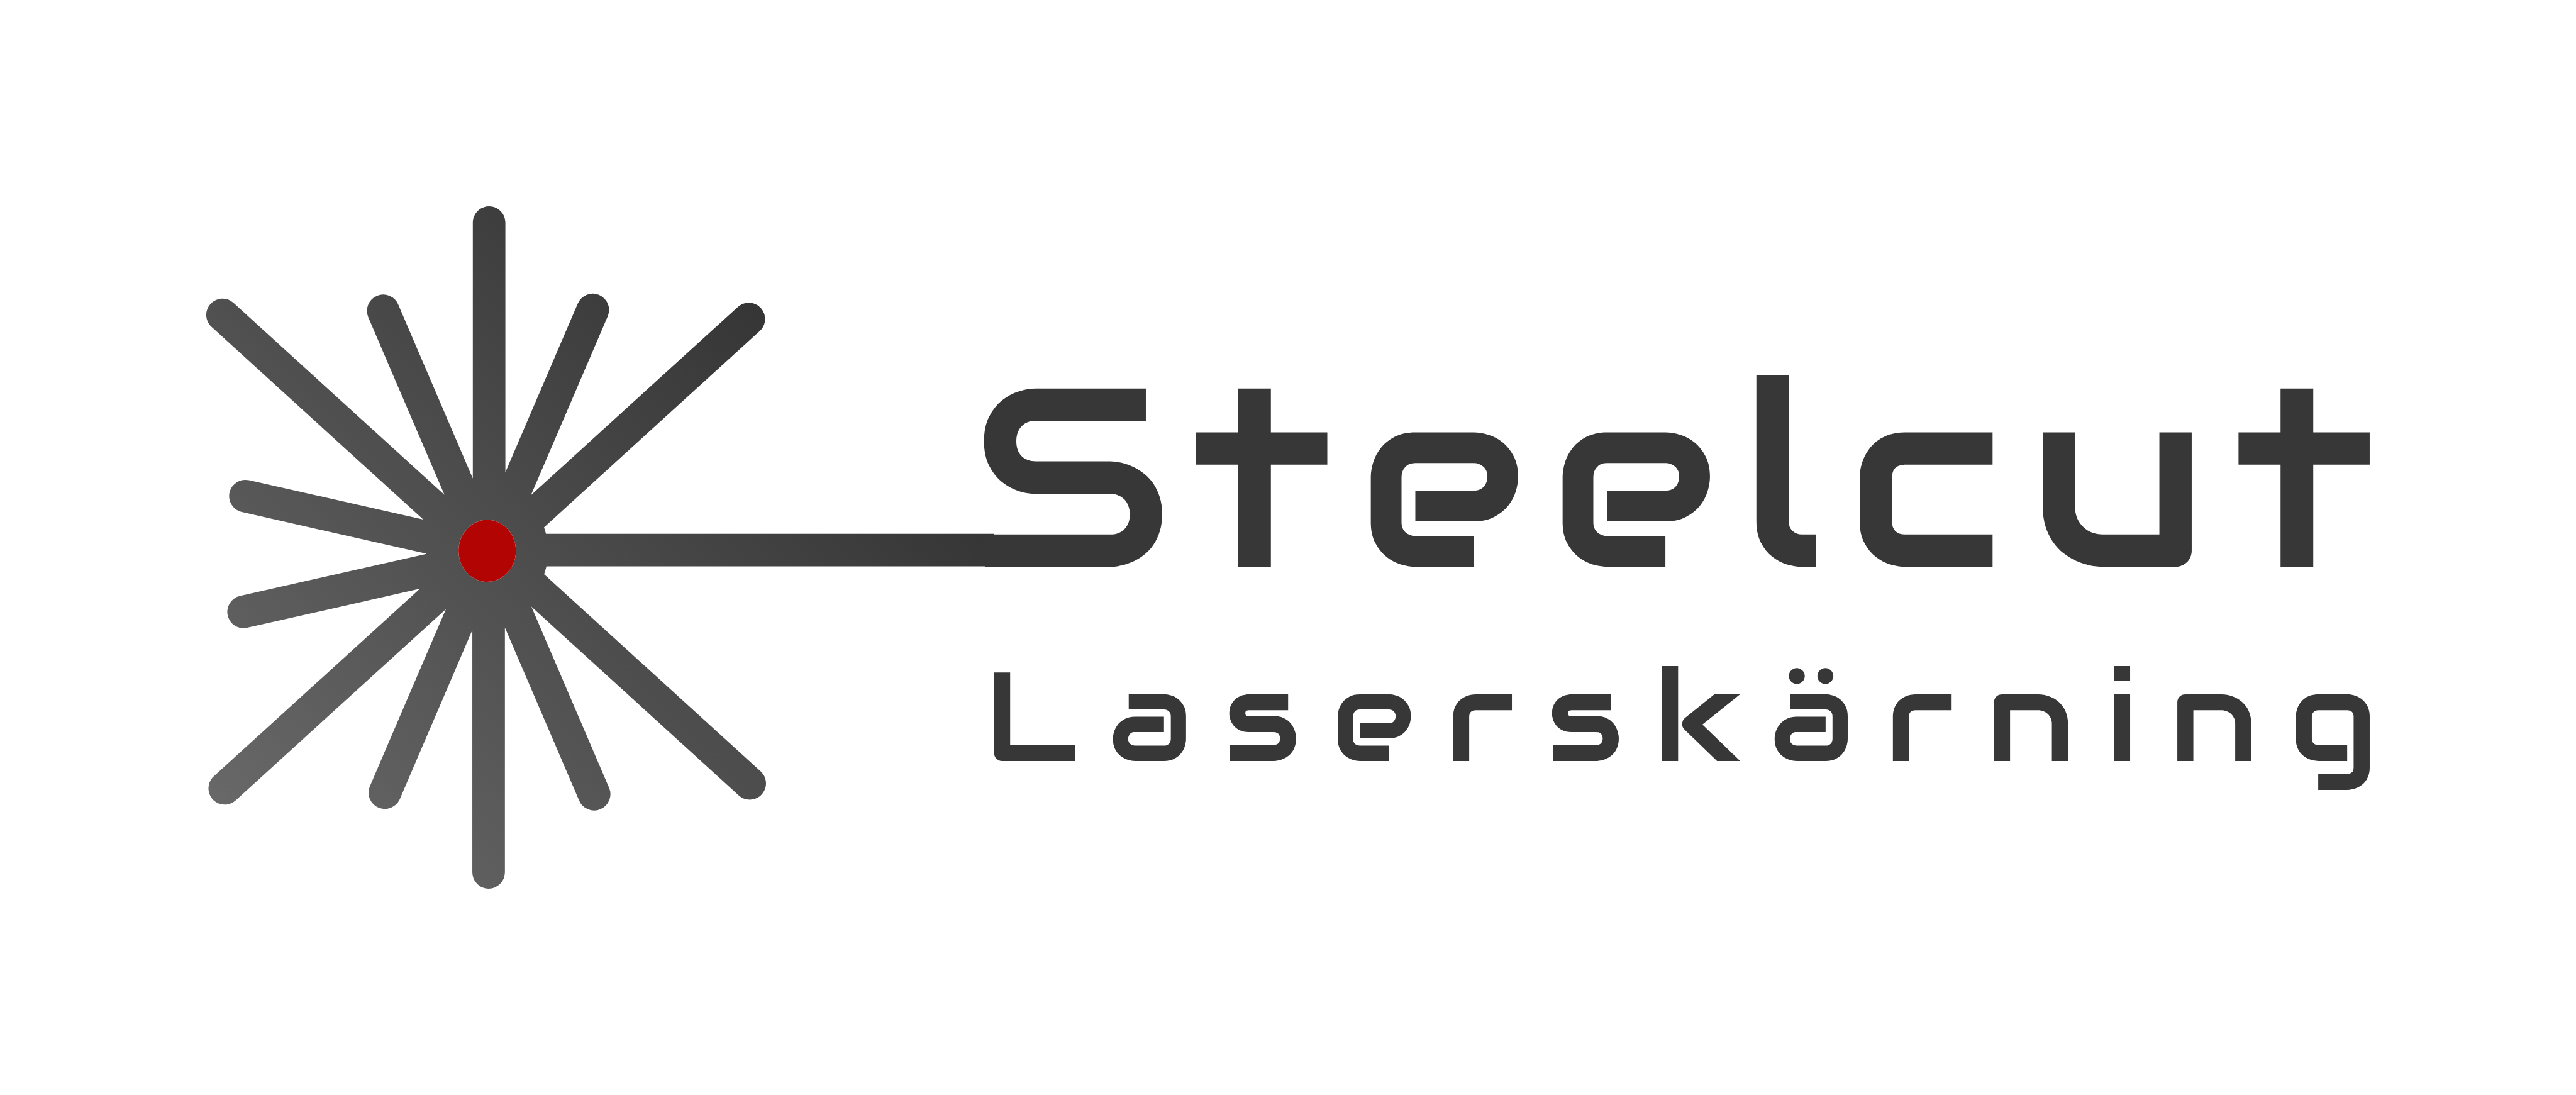 Steelcut Laserskärning